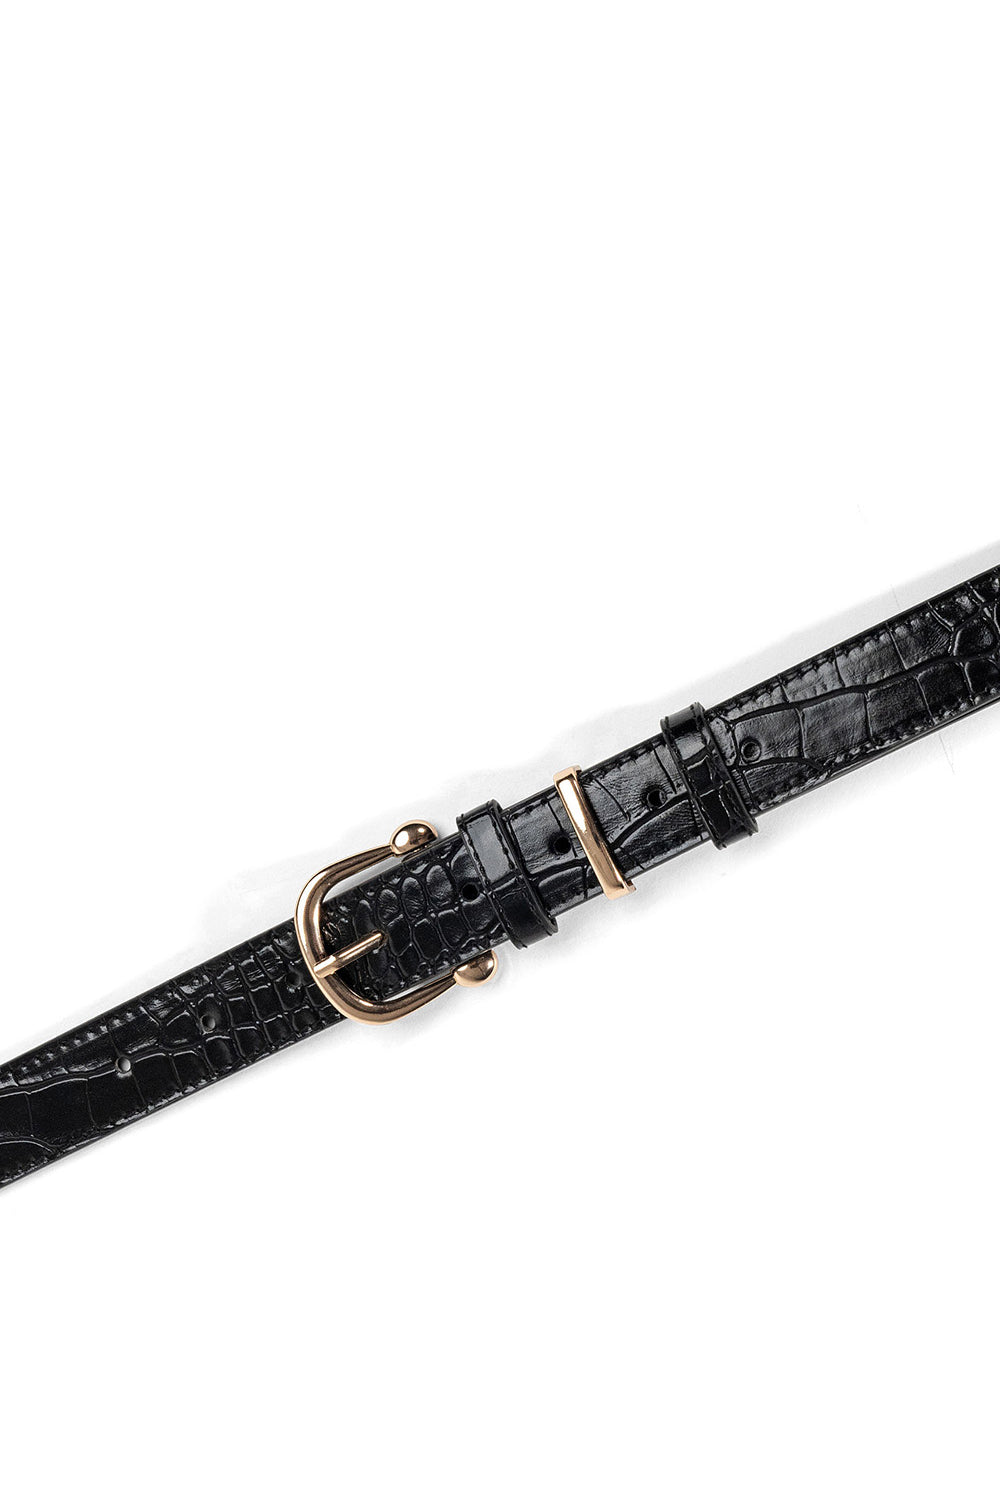 My Accessories London Minimal Croc Belt in Black | Belts | Women | Women's |  Casual  |  Everyday | Essential | Animal Print 